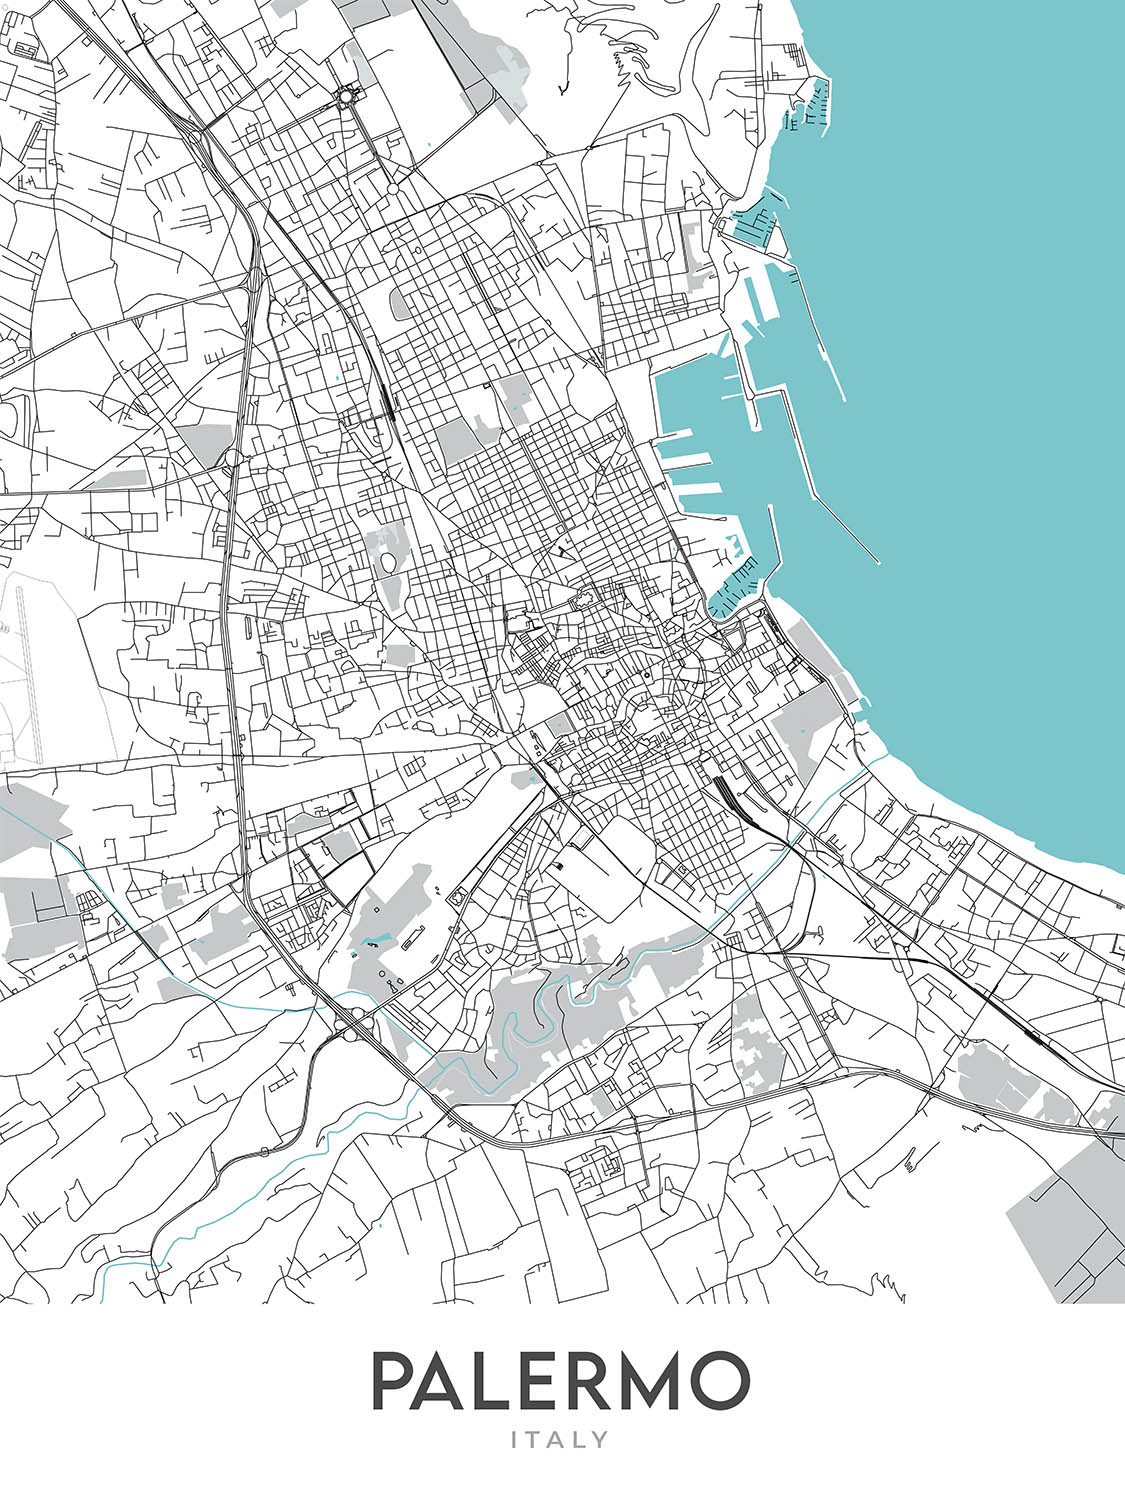 Modern City Map of Palermo, Italy: Albergheria, Kalsa, Teatro Massimo, Politeama, Quattro Canti